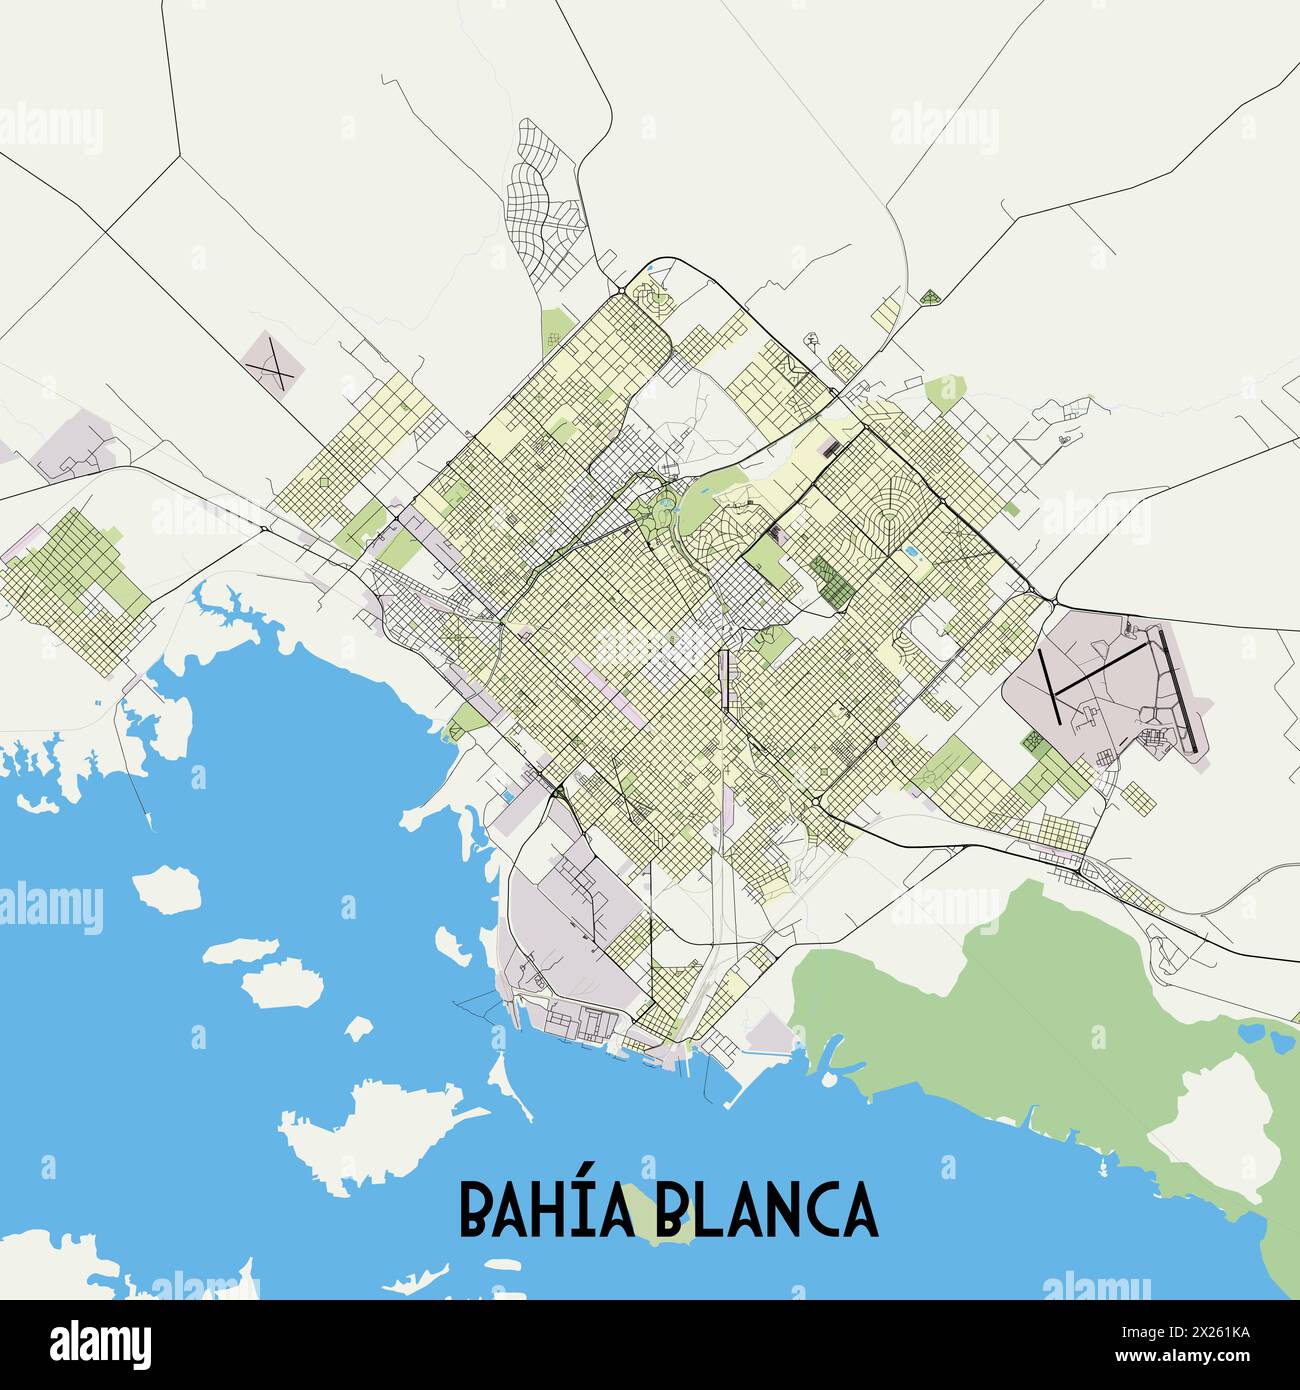 Bahía Blanca Buenos Aires Province Argentina map poster art Stock Vector